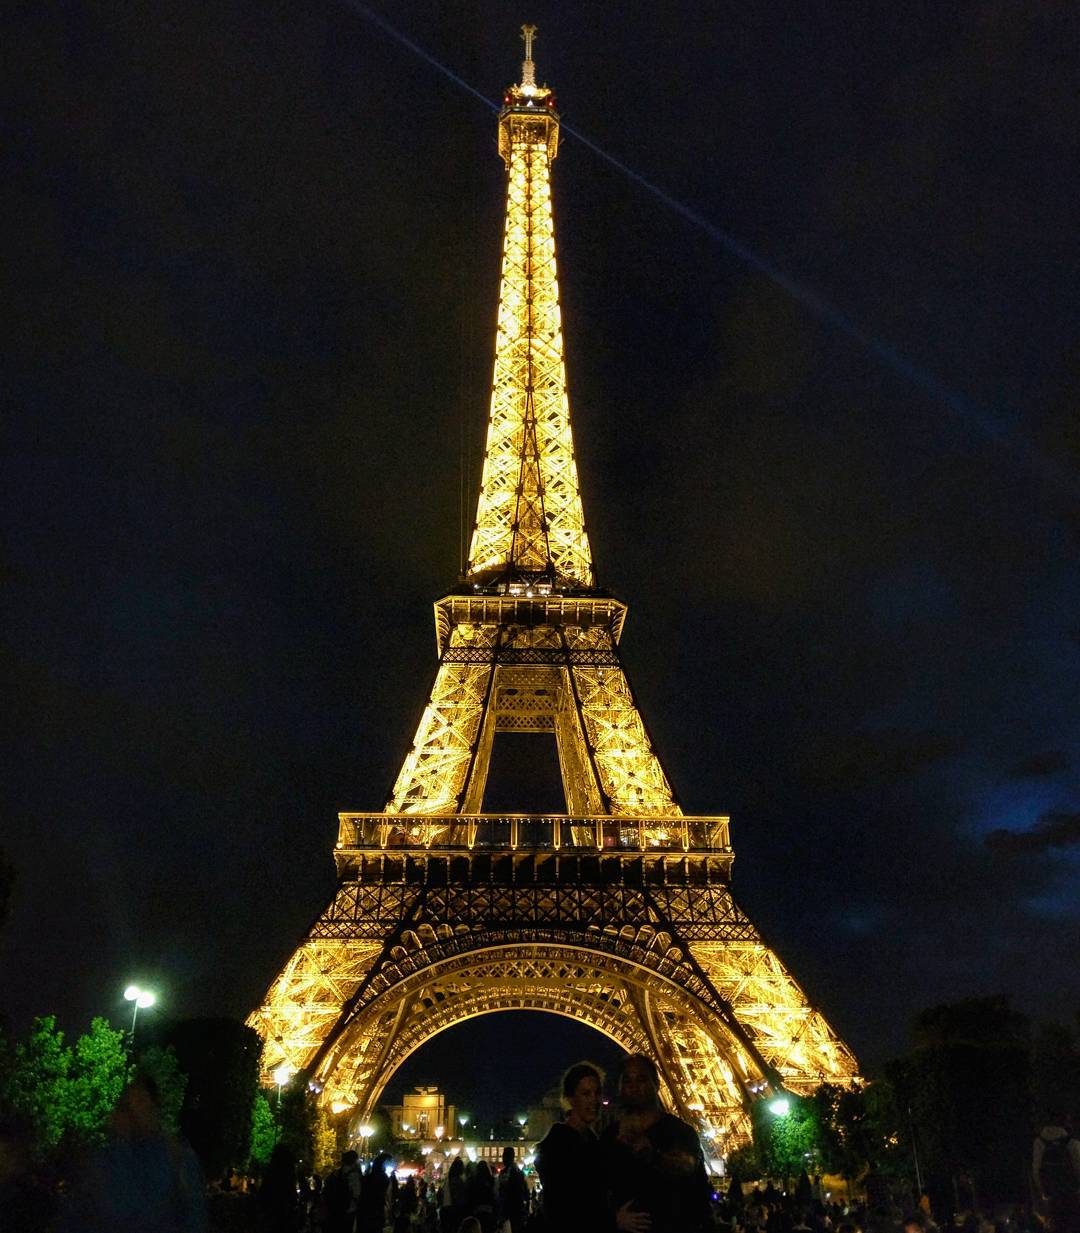 Good night #Paris